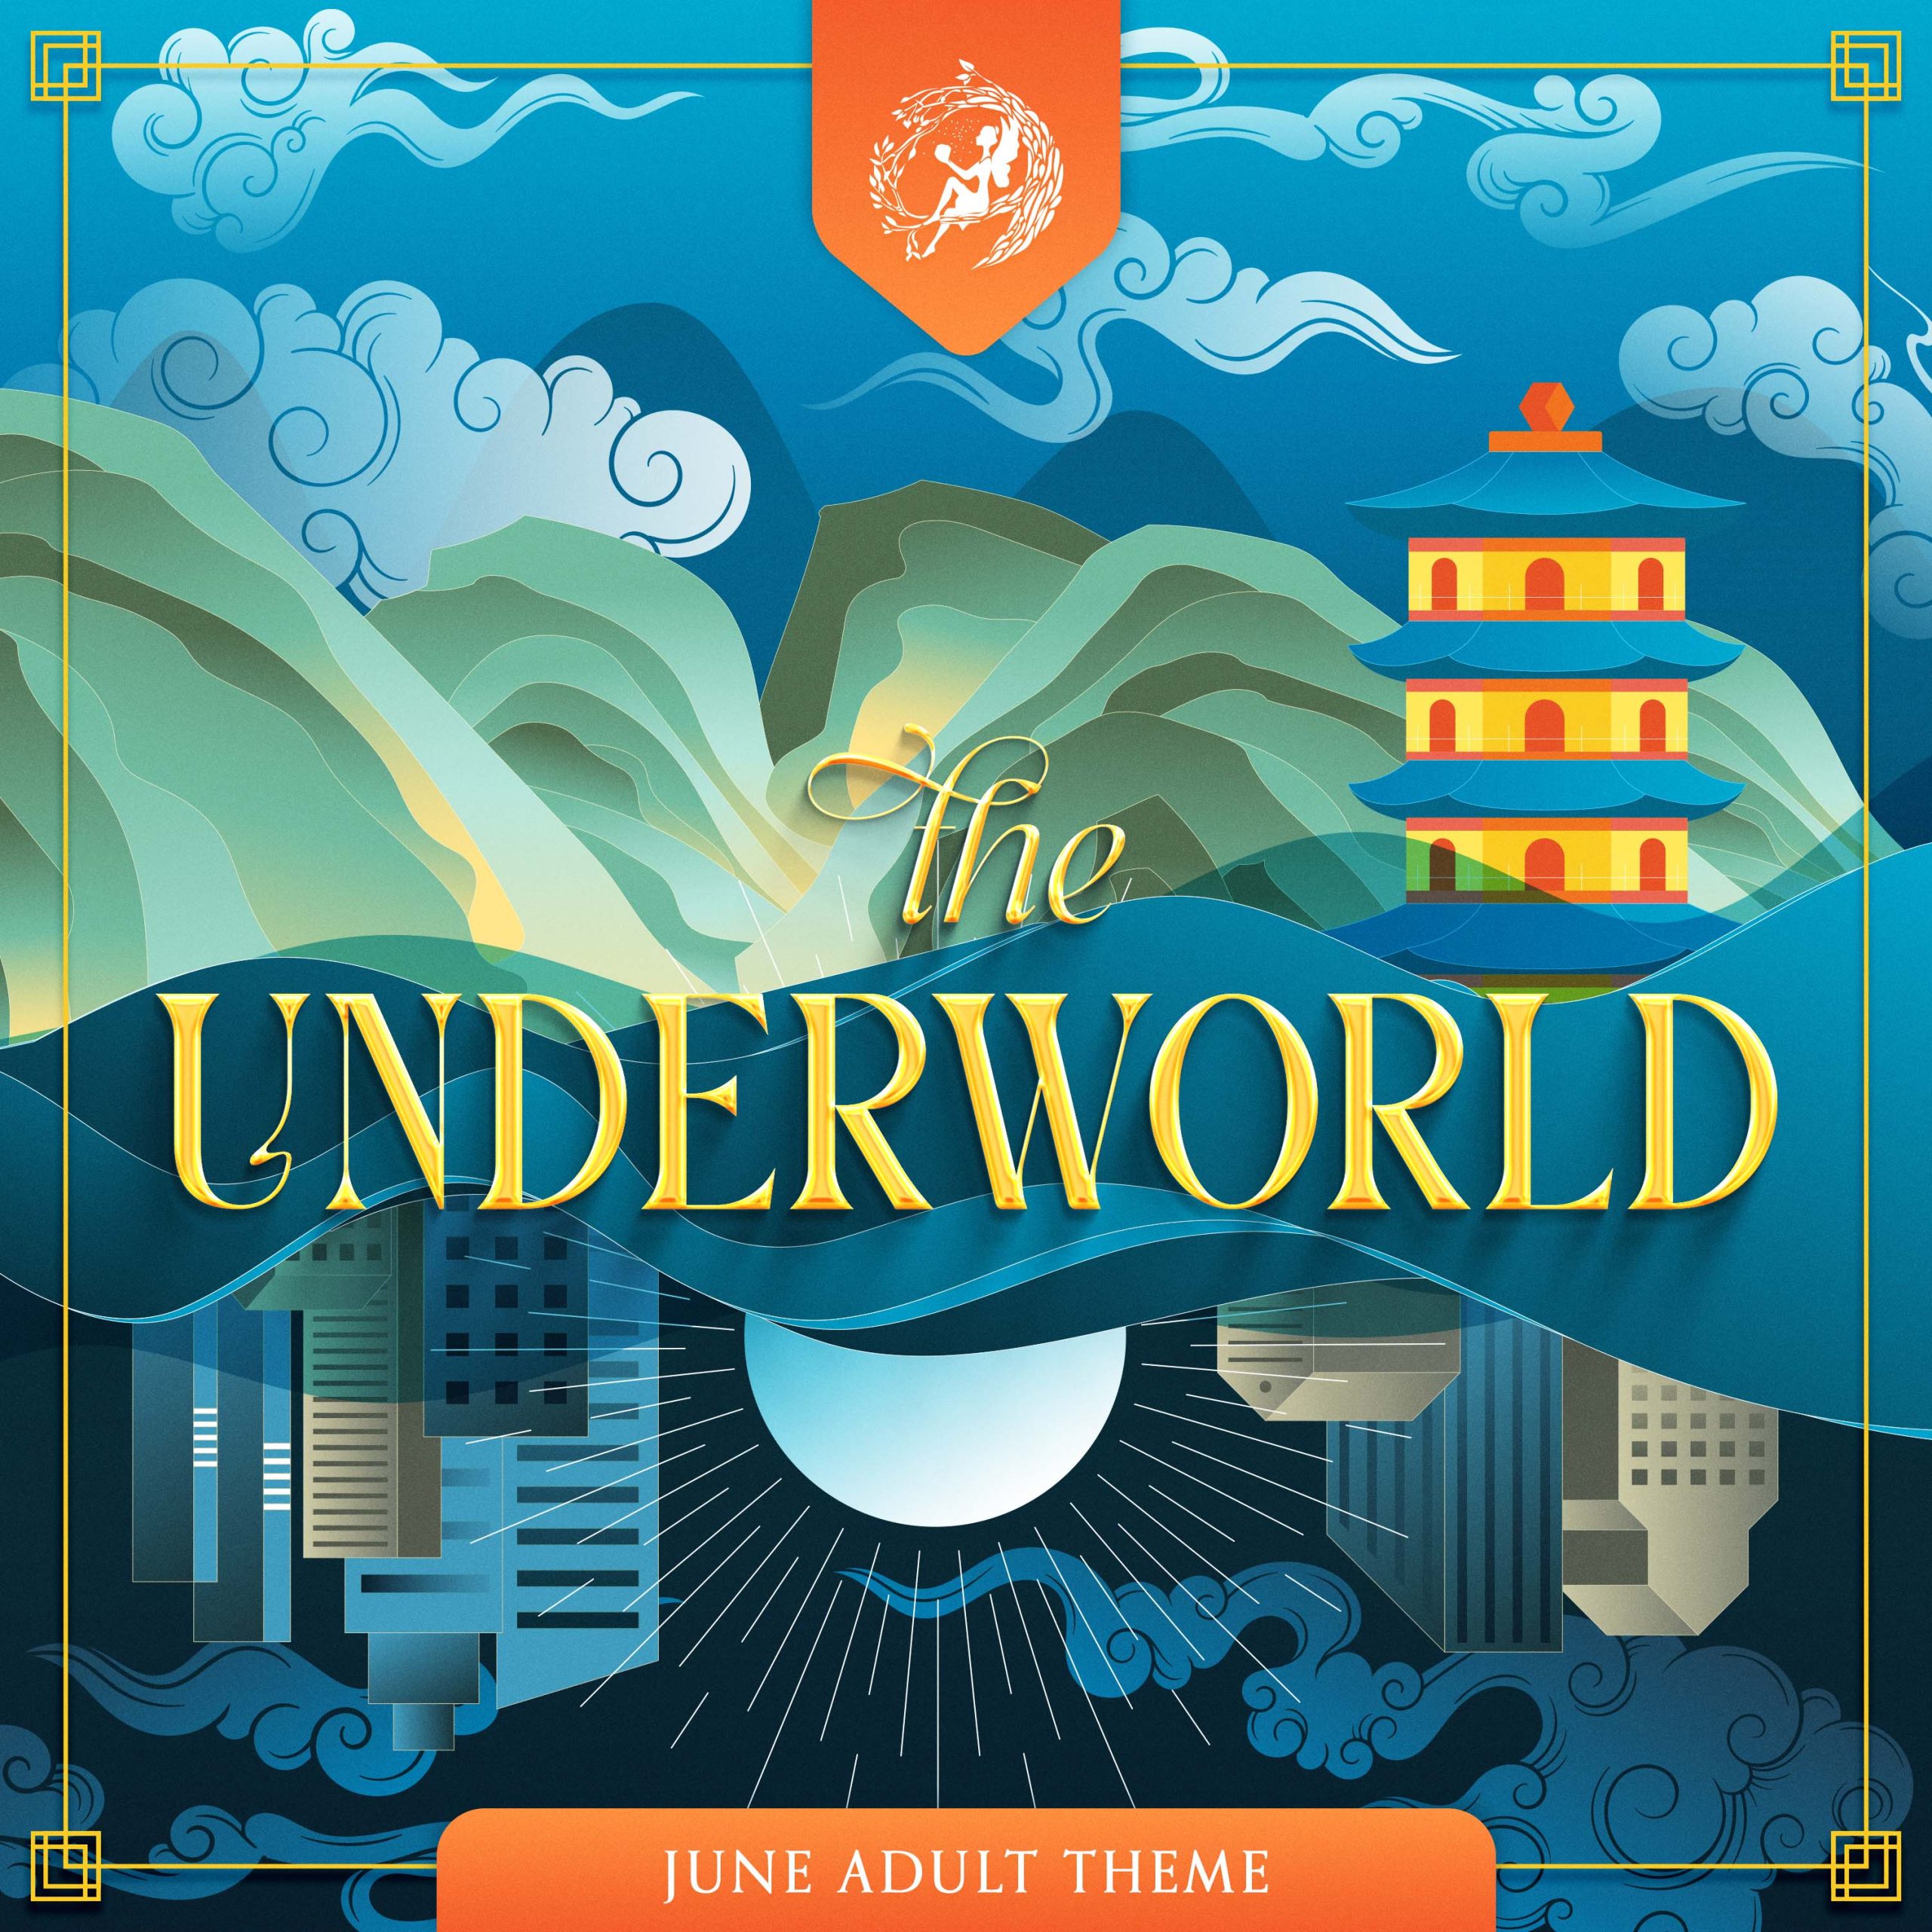 June Adult Theme: THE UNDERWORLD